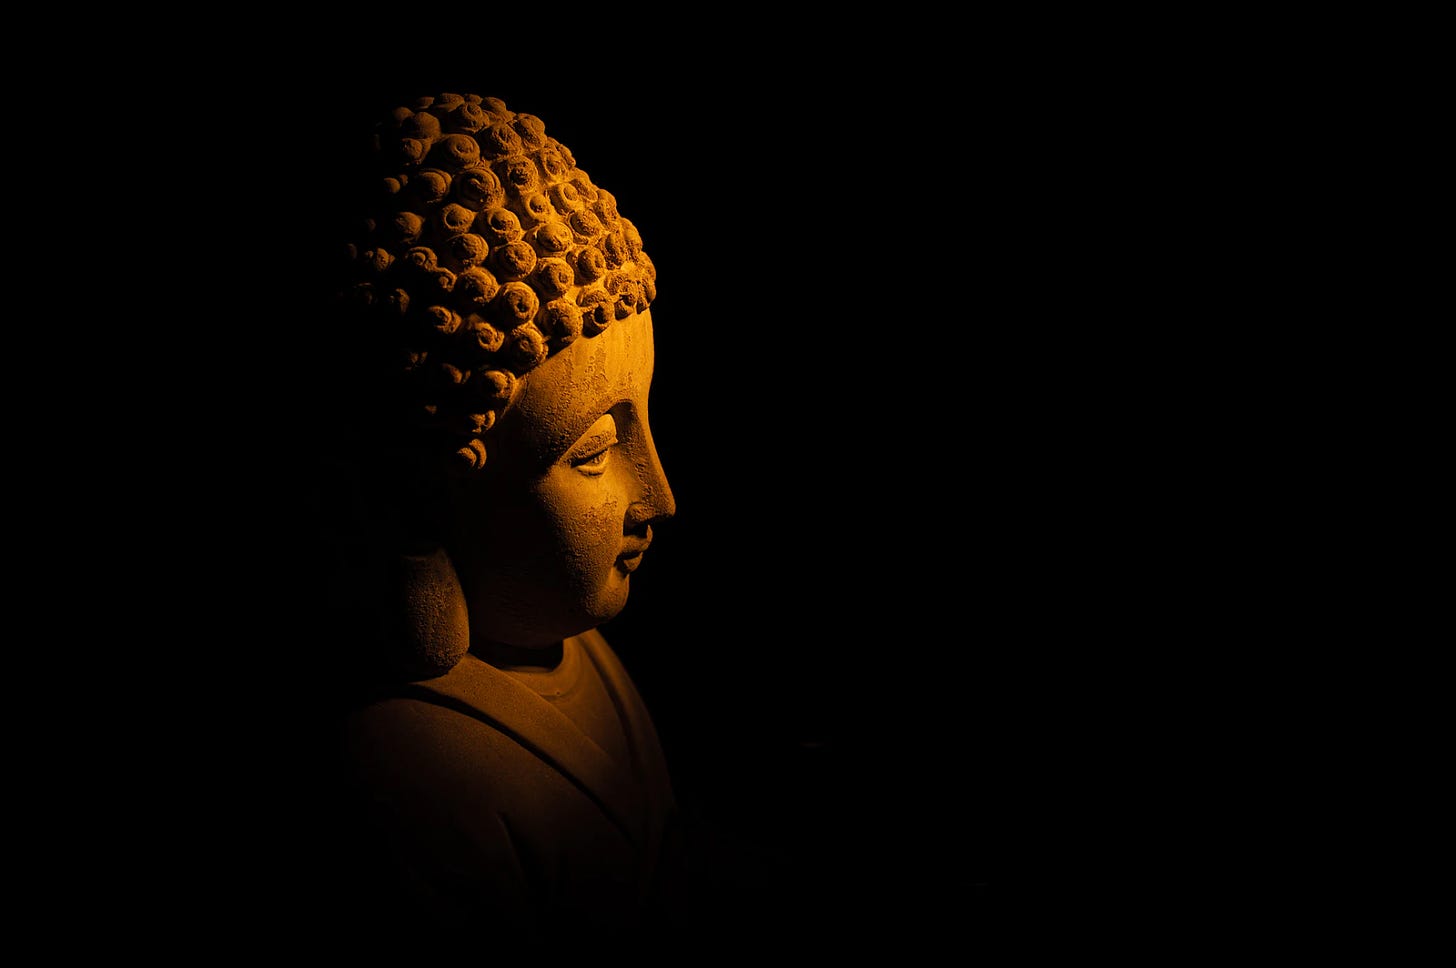 Buddha emerging from darkness. 